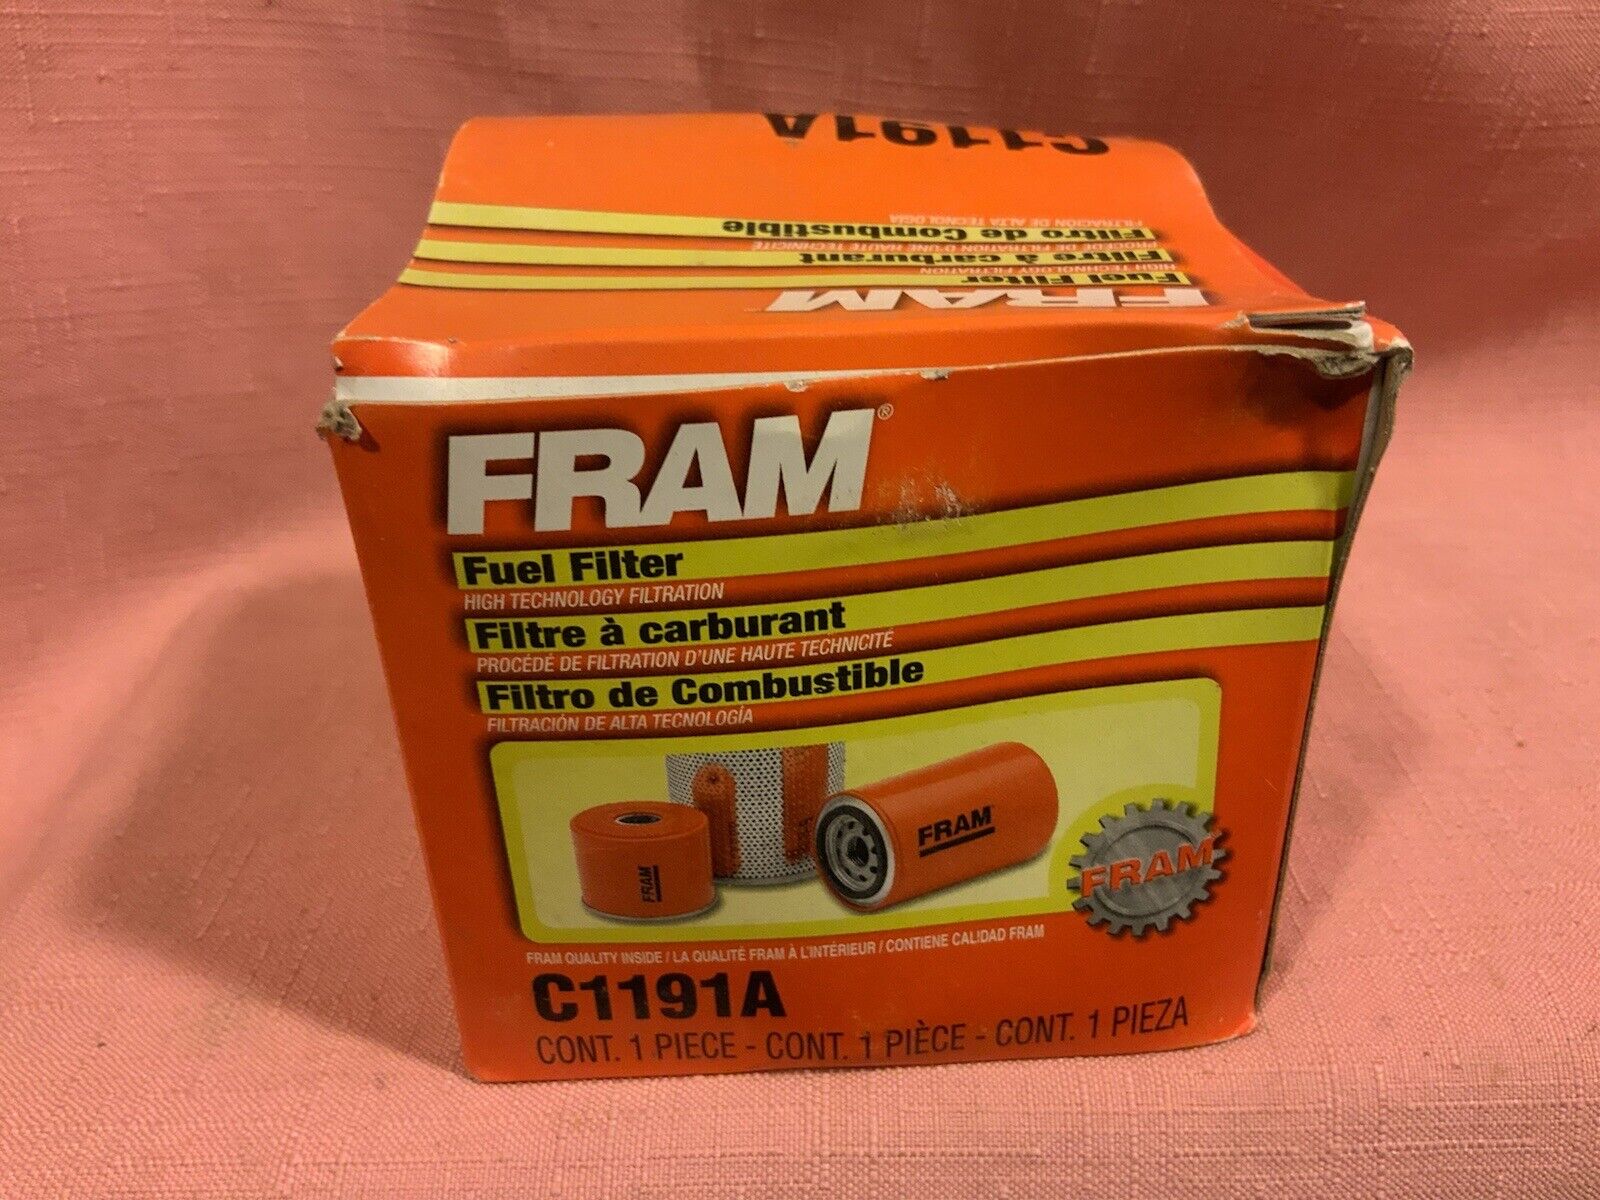 FRAM C1191A Fuel Filter